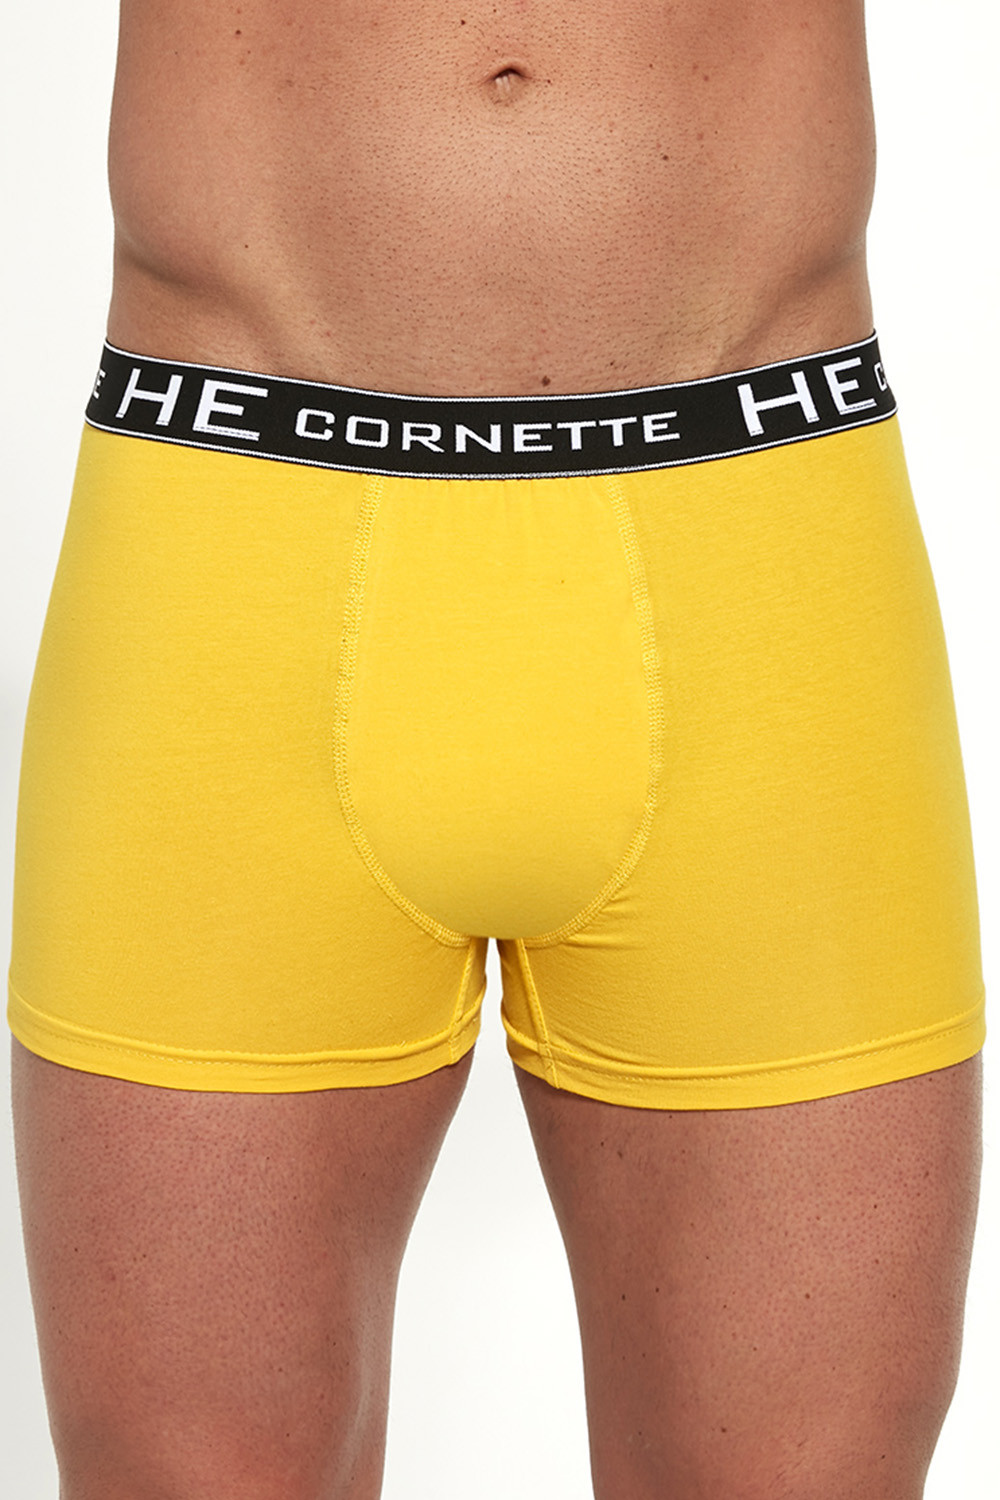 Cornette High Emotion 503 kolor:żółty L